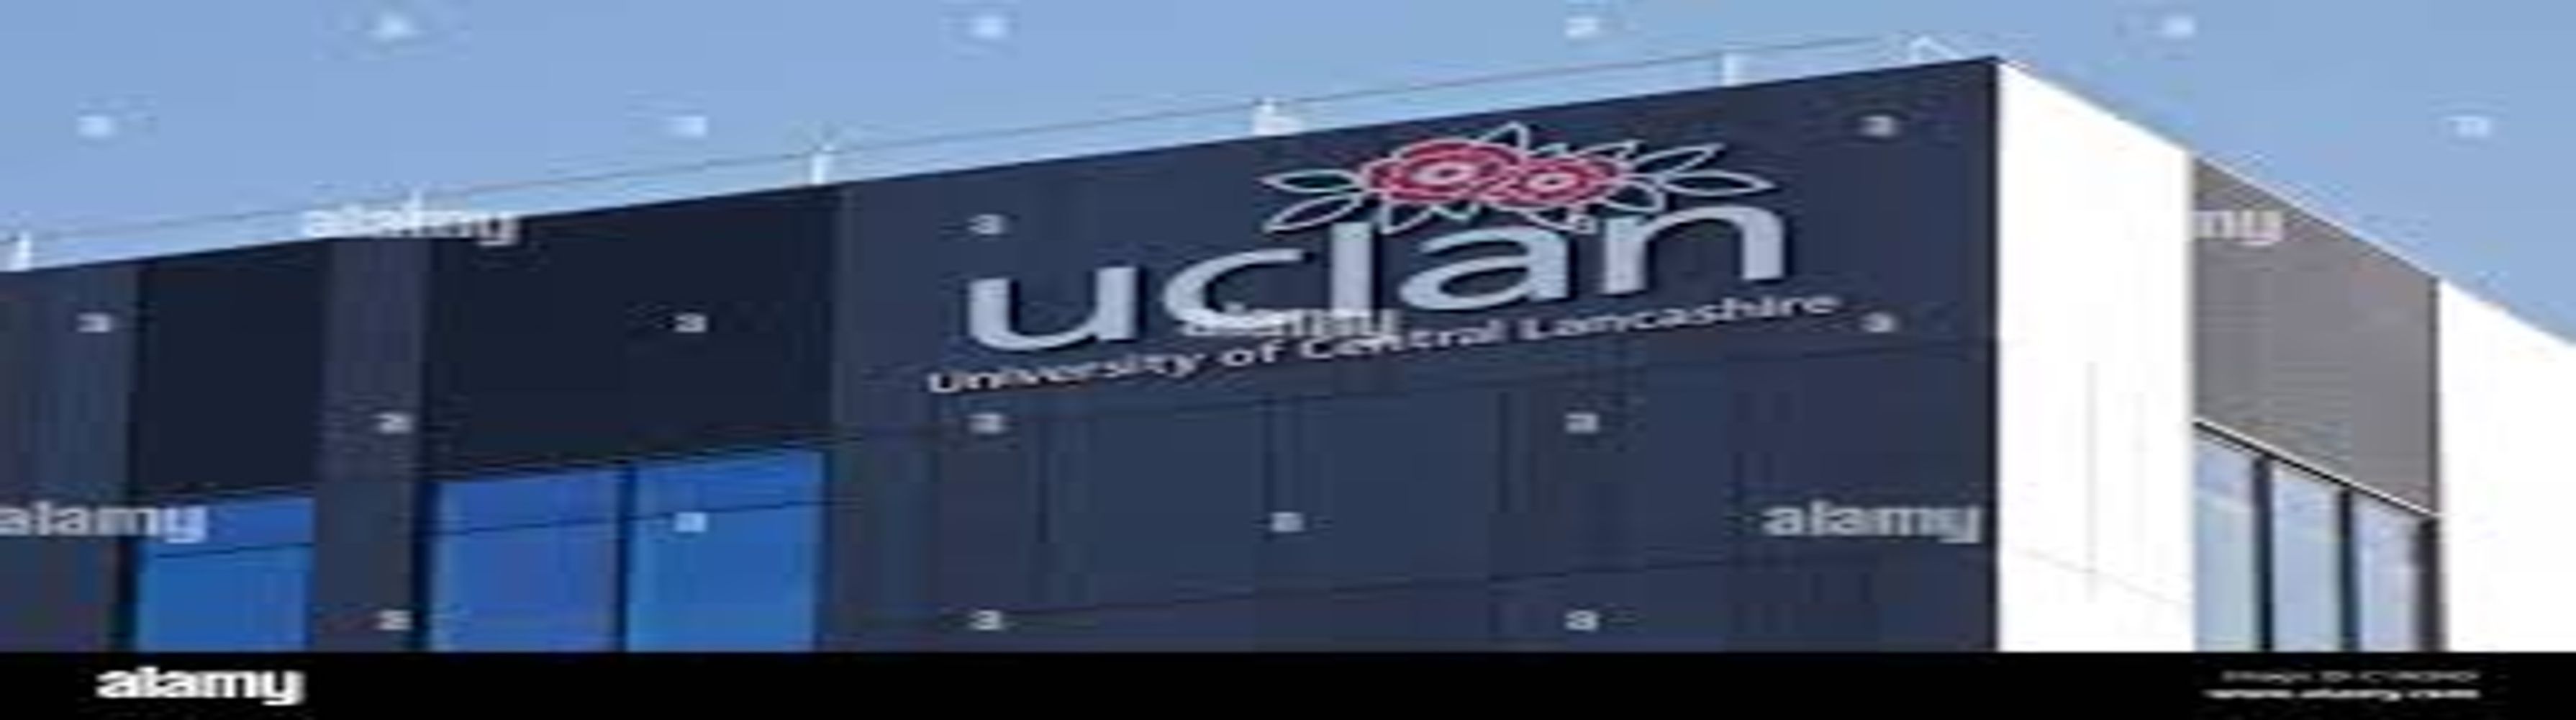 University of Central Lancashire(UCLan)